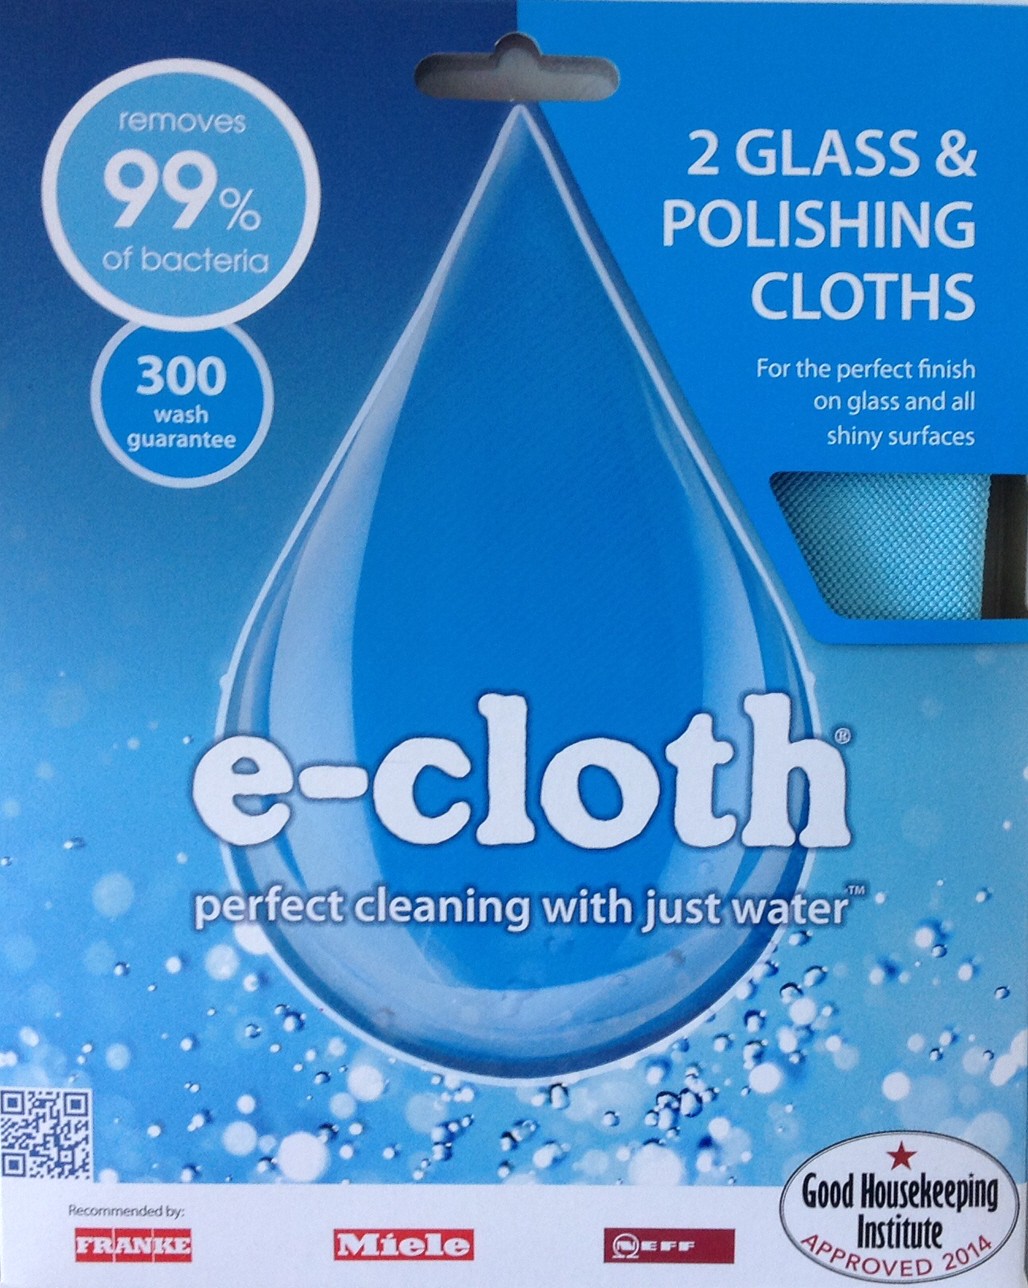 E Cloth Glass & Polishing Cloth